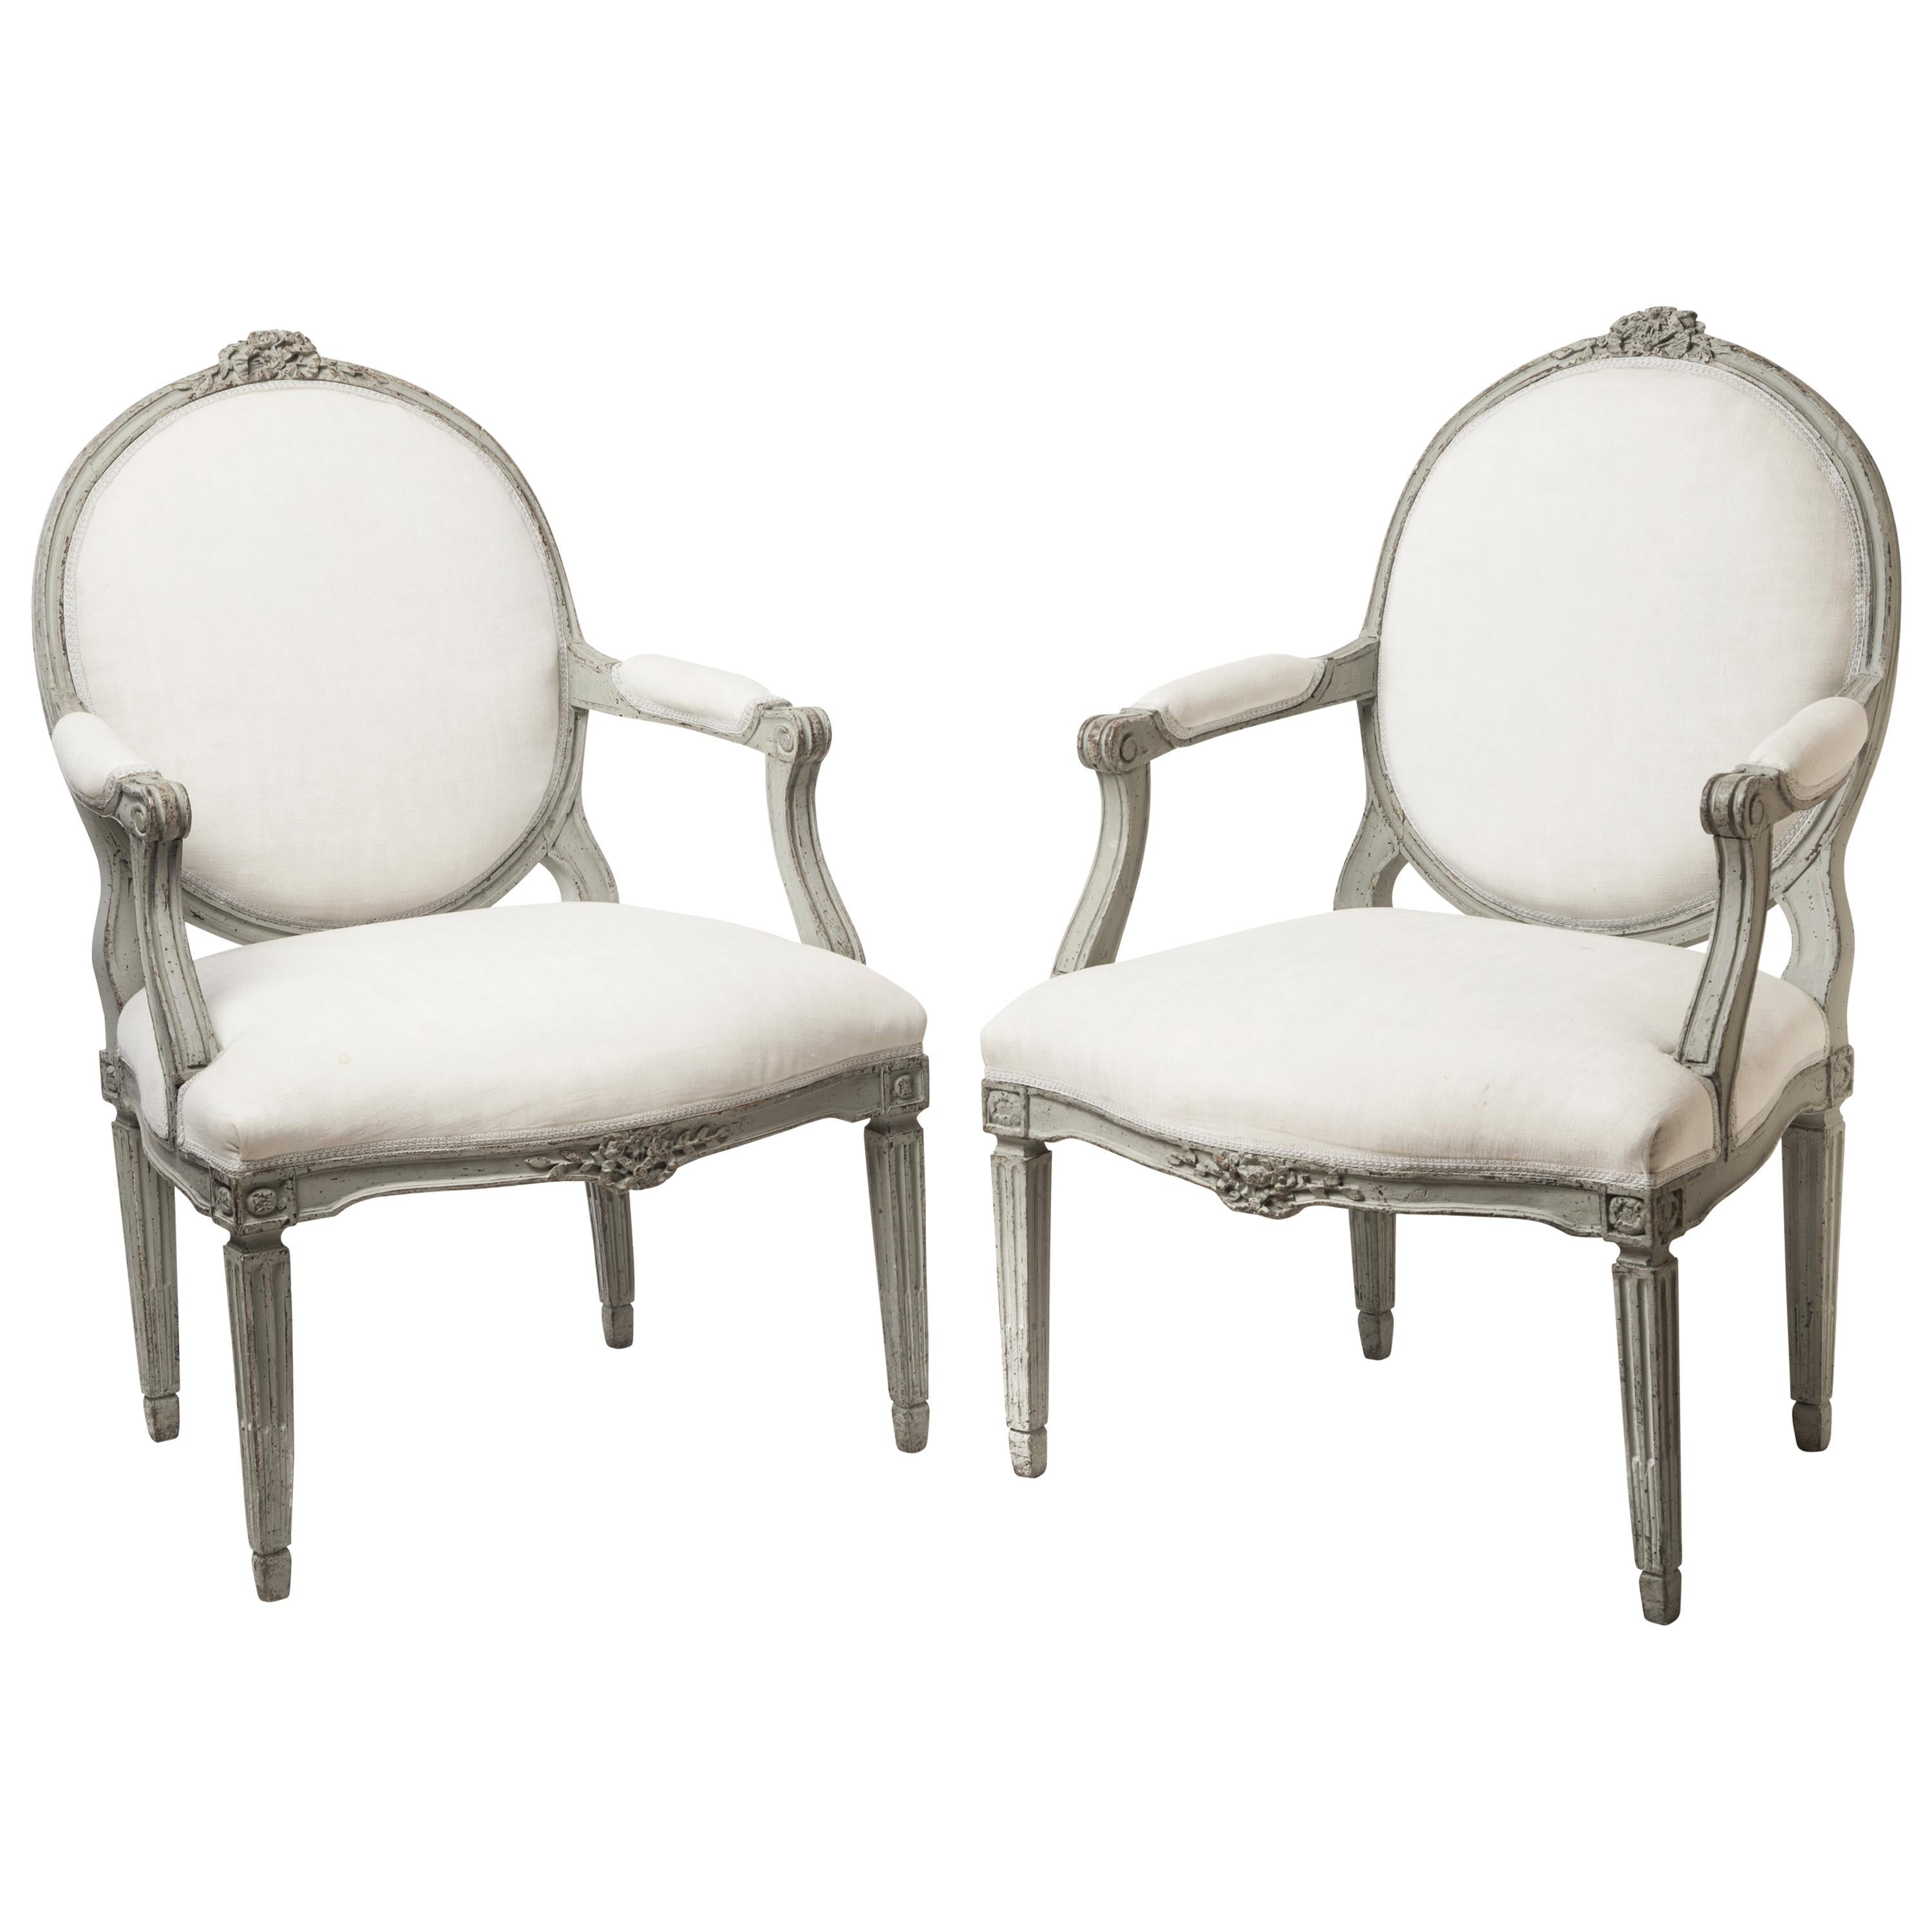 Paar antike schwedische Fauteuils/Sessel aus dem 18. Jahrhundert